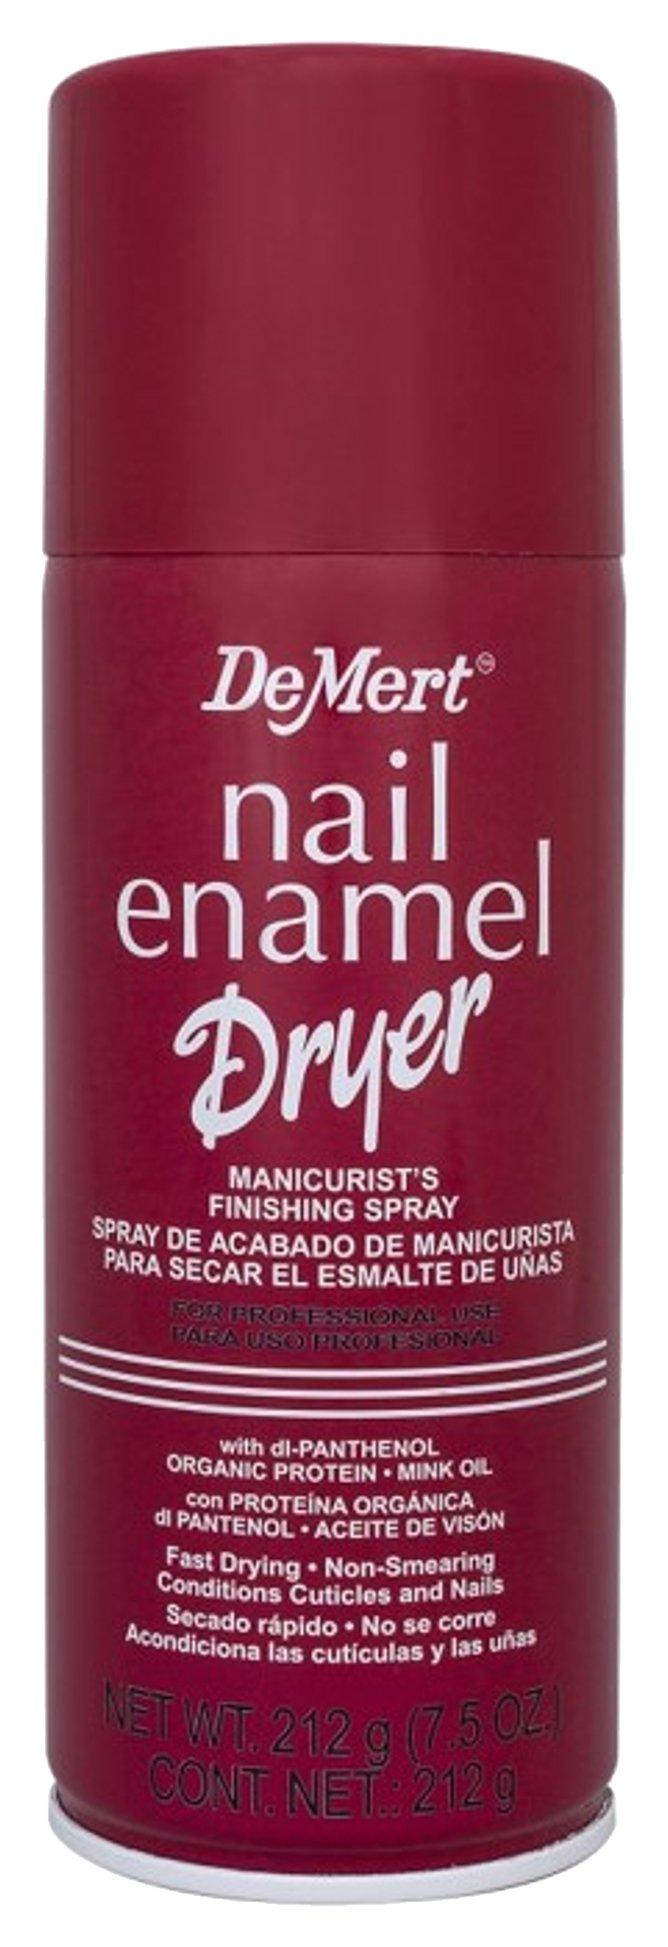 DeMert 7.5 Oz. Nail Enamel Dryer Manicure Finishing